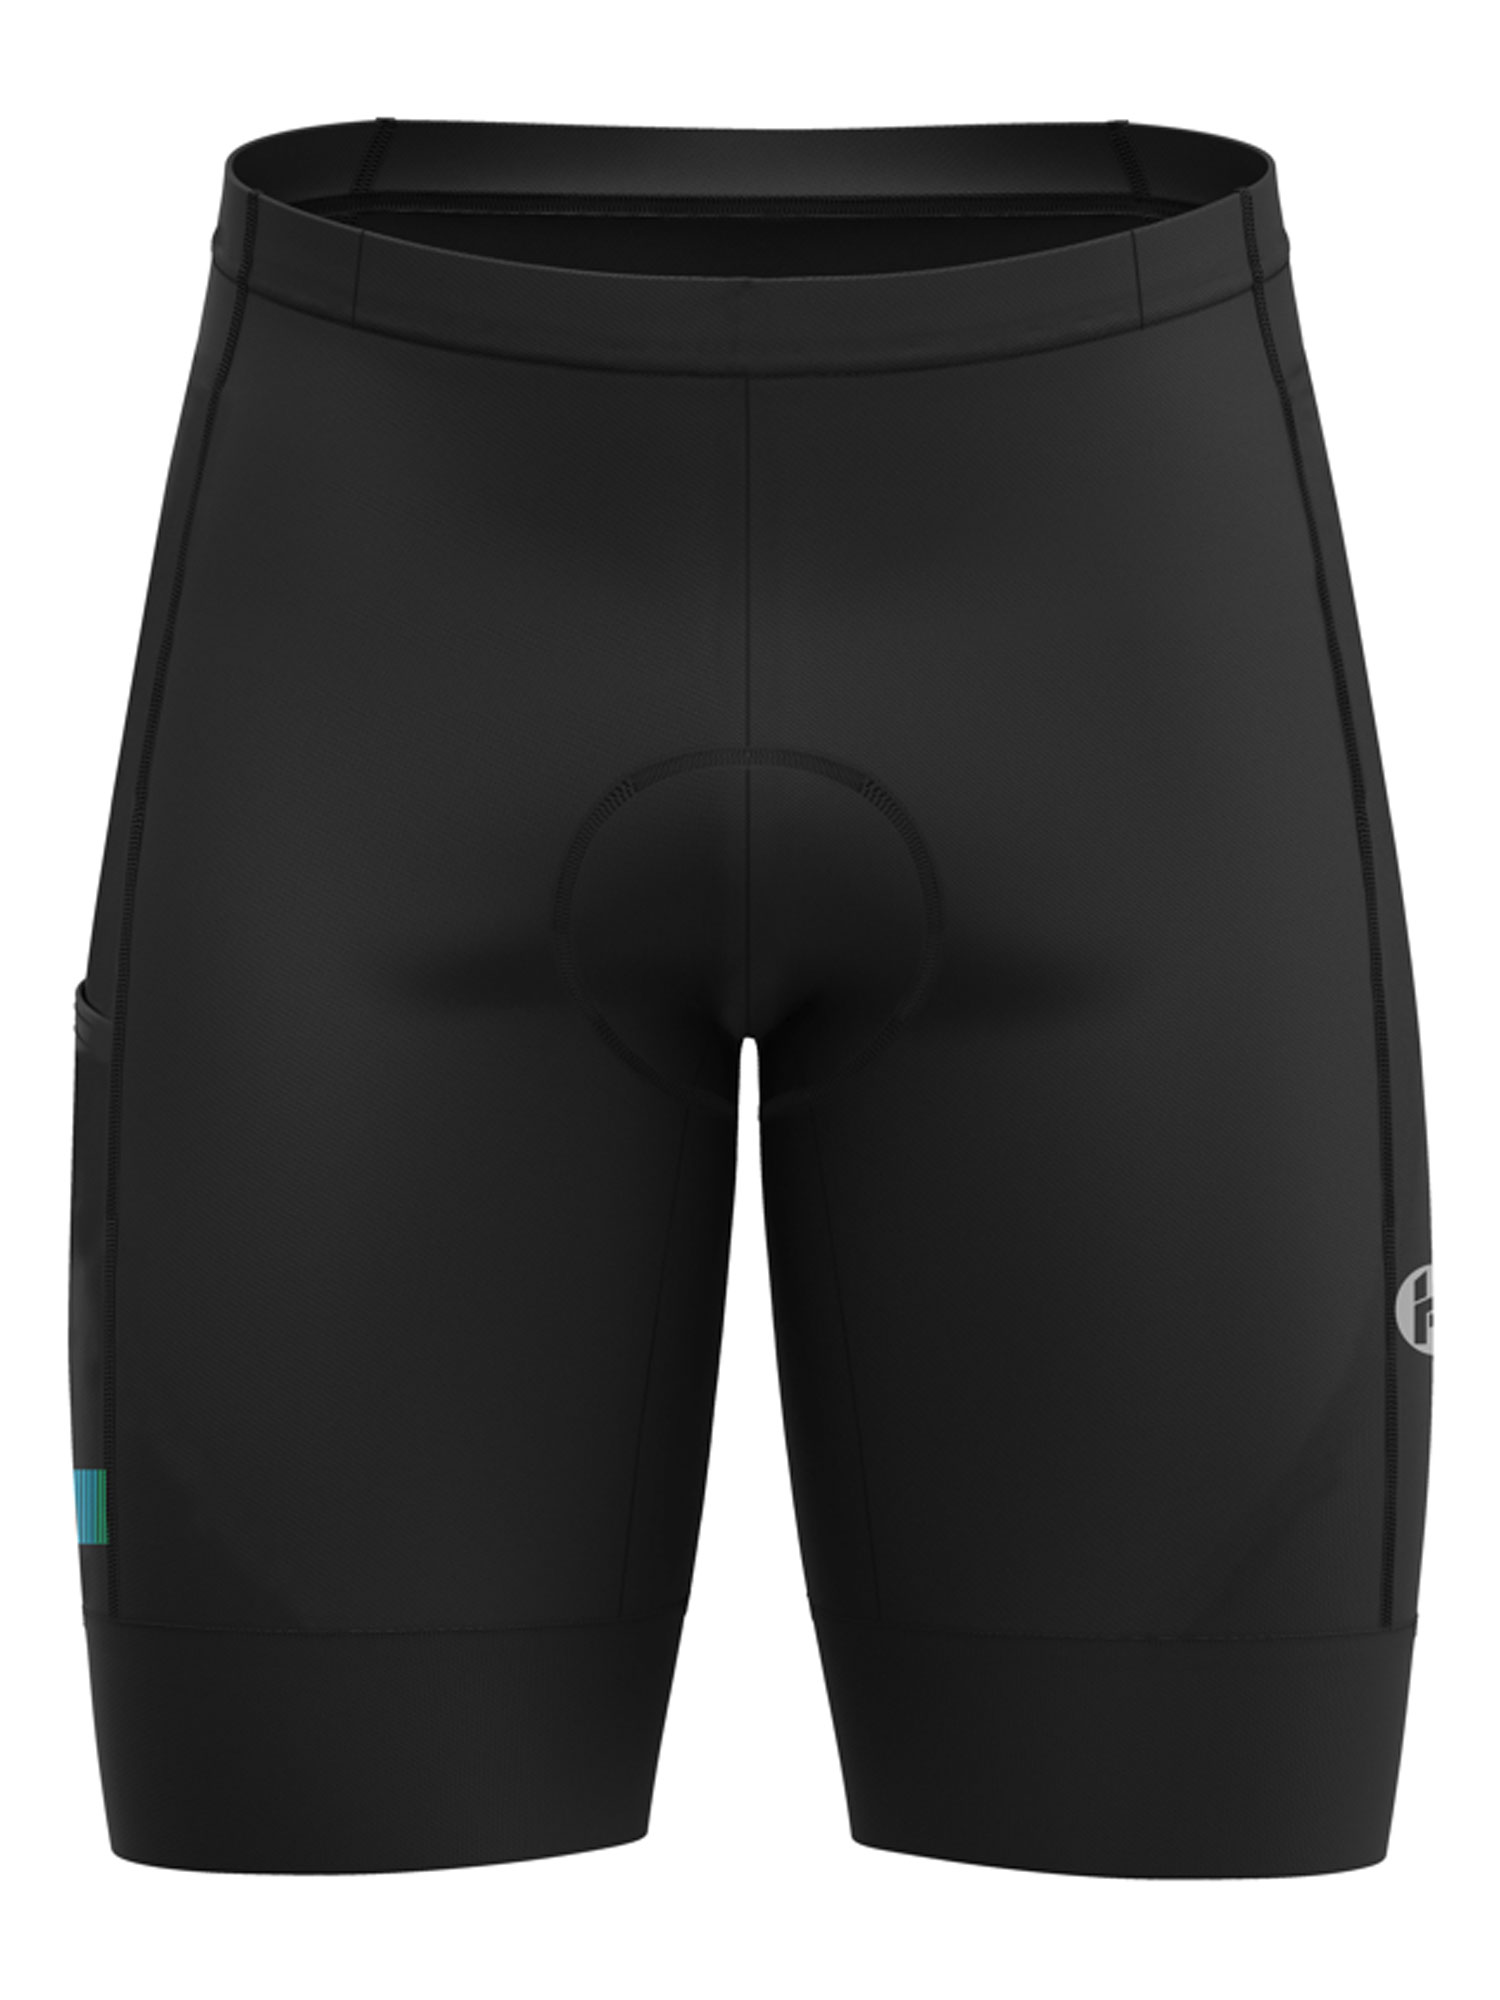 Men's Pro Gel Padded Black Cycling Pants